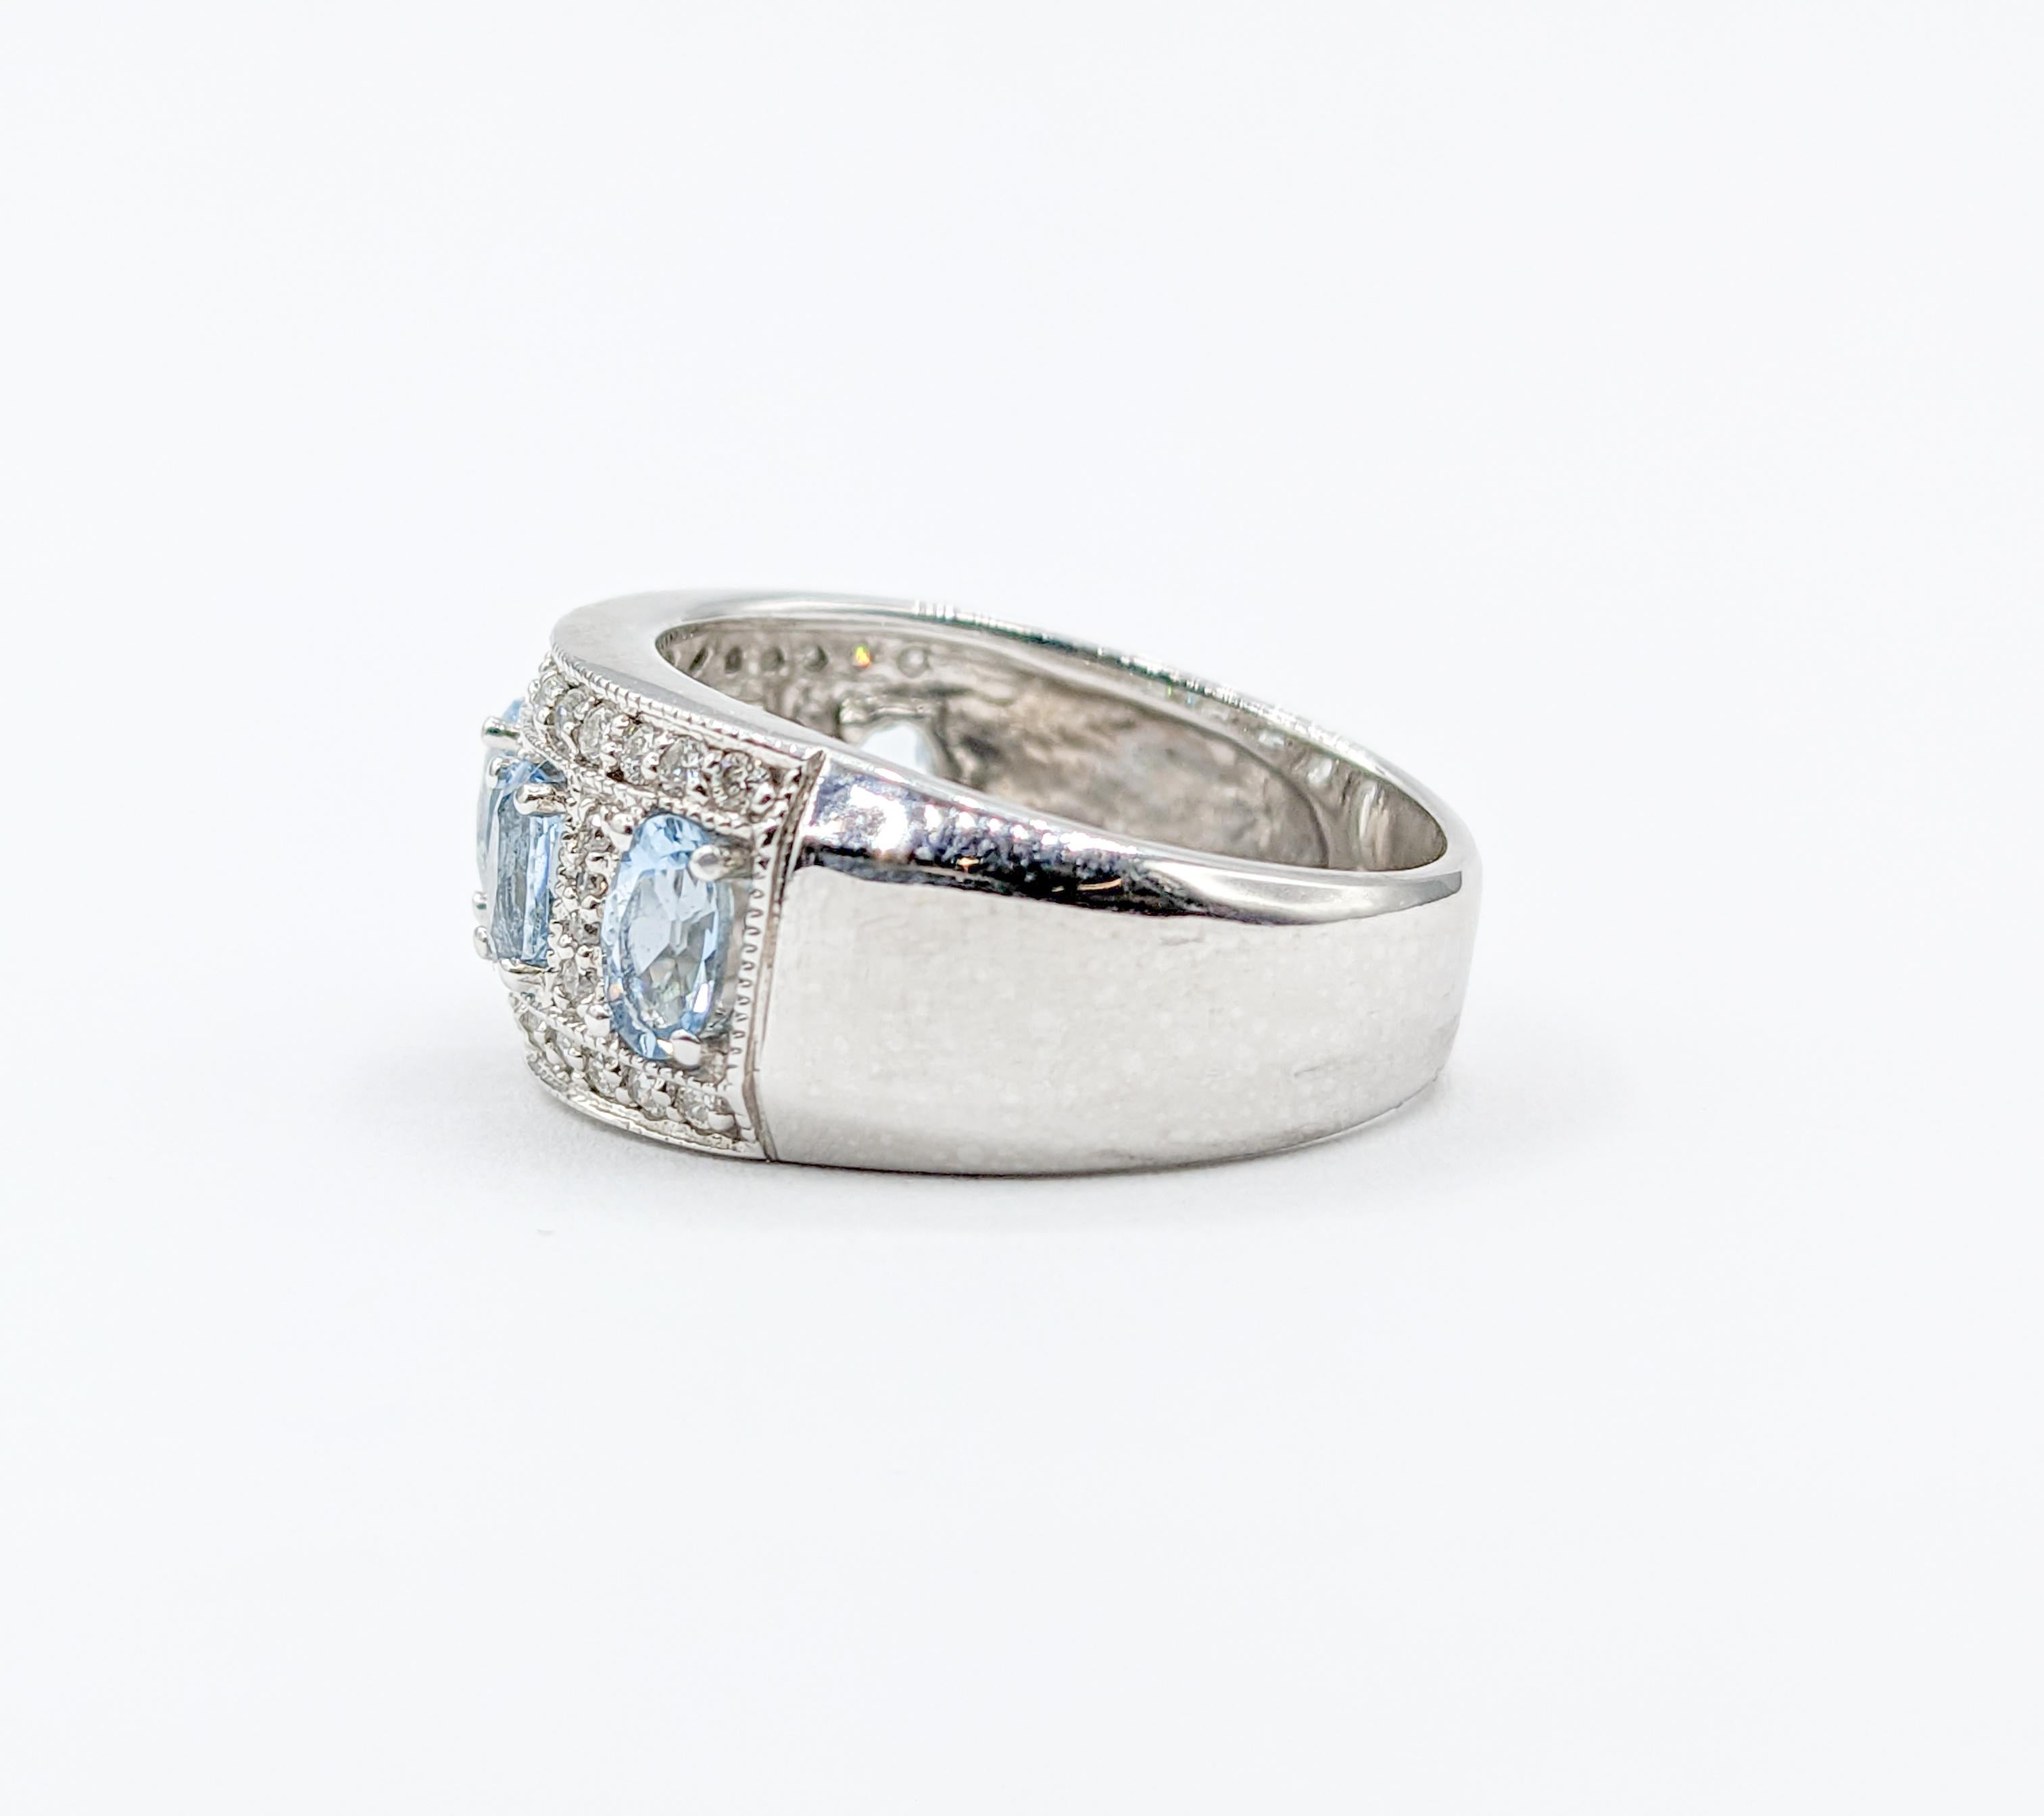  Fabulous Aquamarine & Diamond Wide Band Ring in White Gold 4